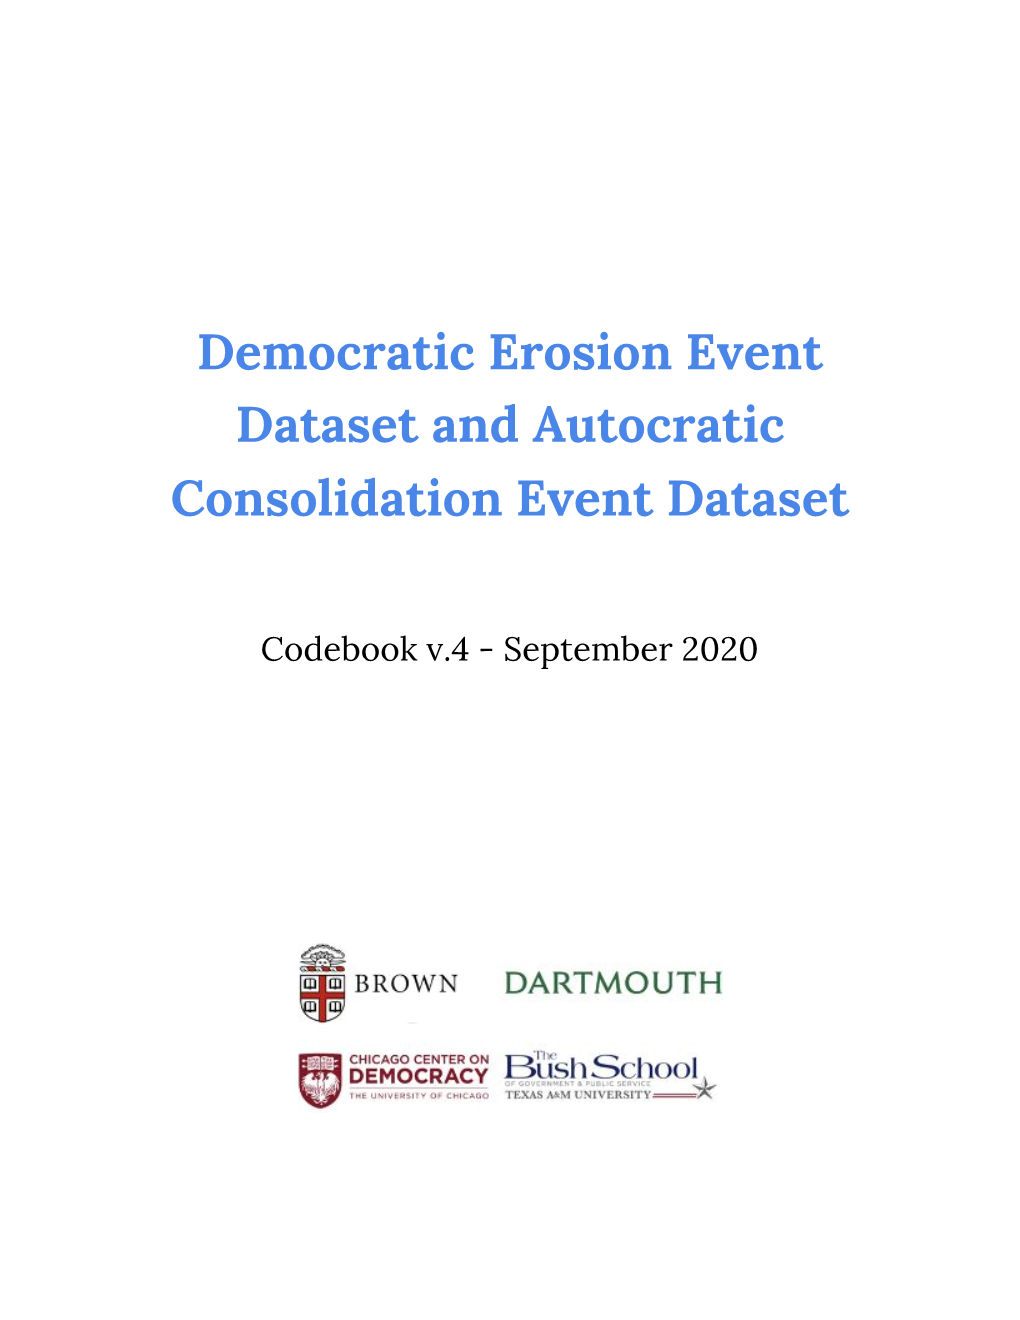 Democratic Erosion Event Dataset and Autocratic Consolidation Event Dataset